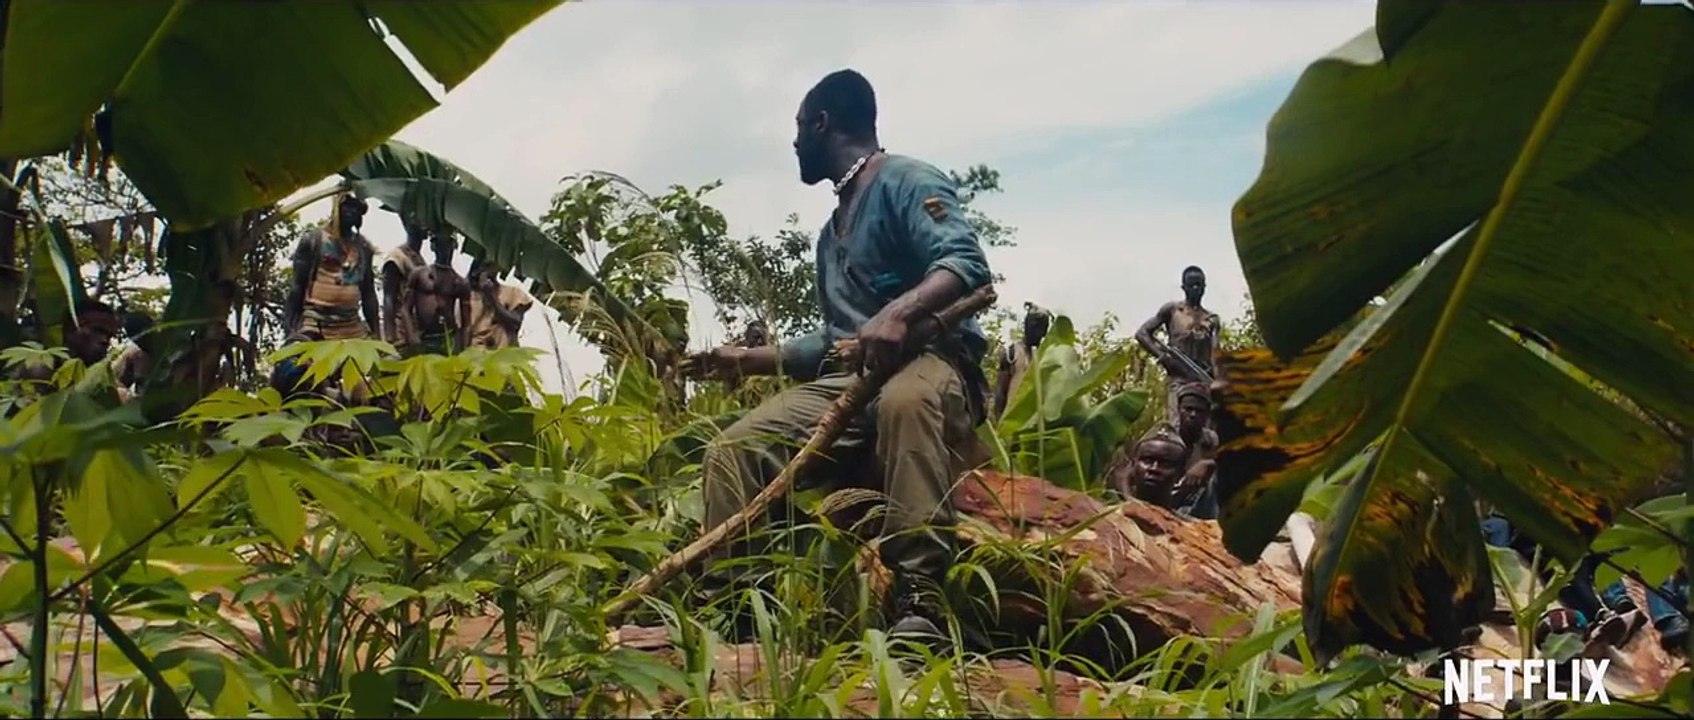 BEASTS OF NO NATION - Official Final Trailer (2015) Idris Elba Netflix War Drama Movie HD